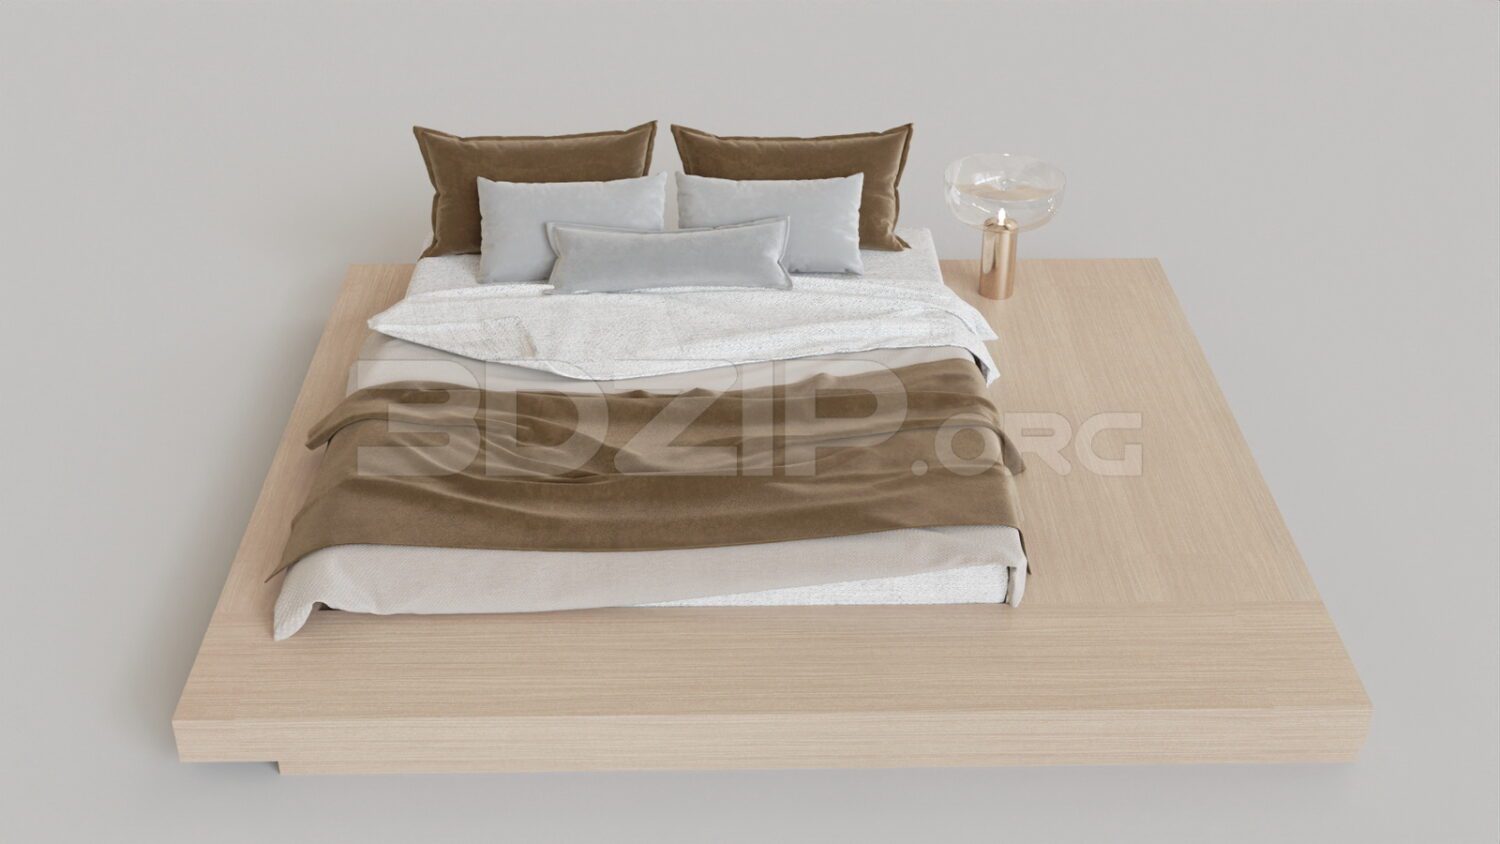 4963. Free 3D Bed Model Download